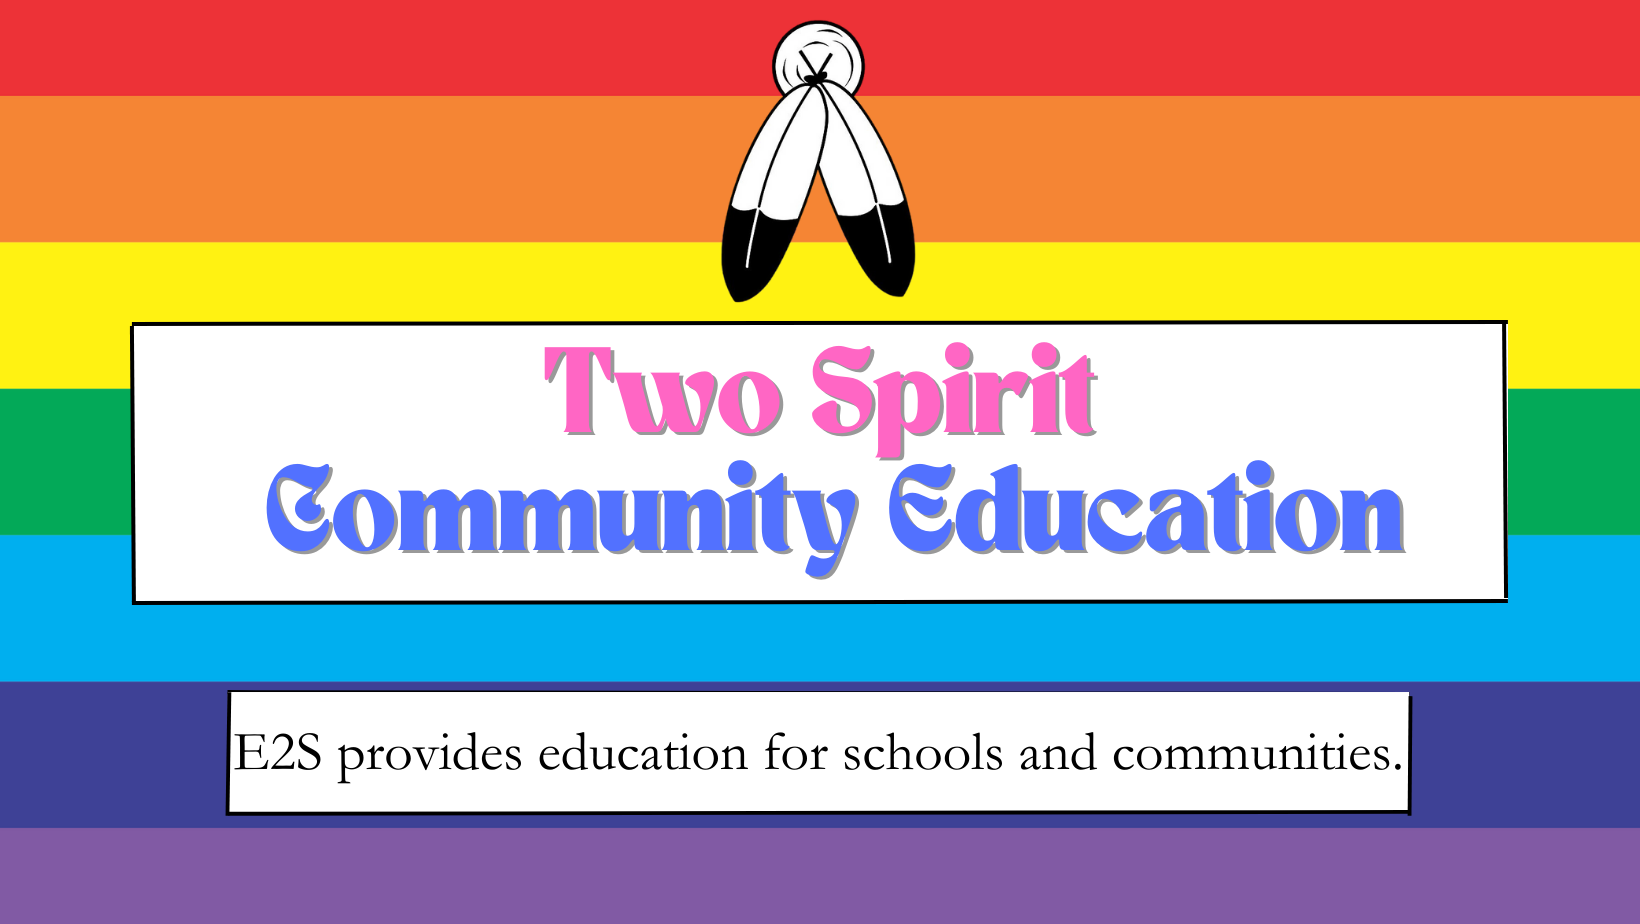 Two Spirit Community Education